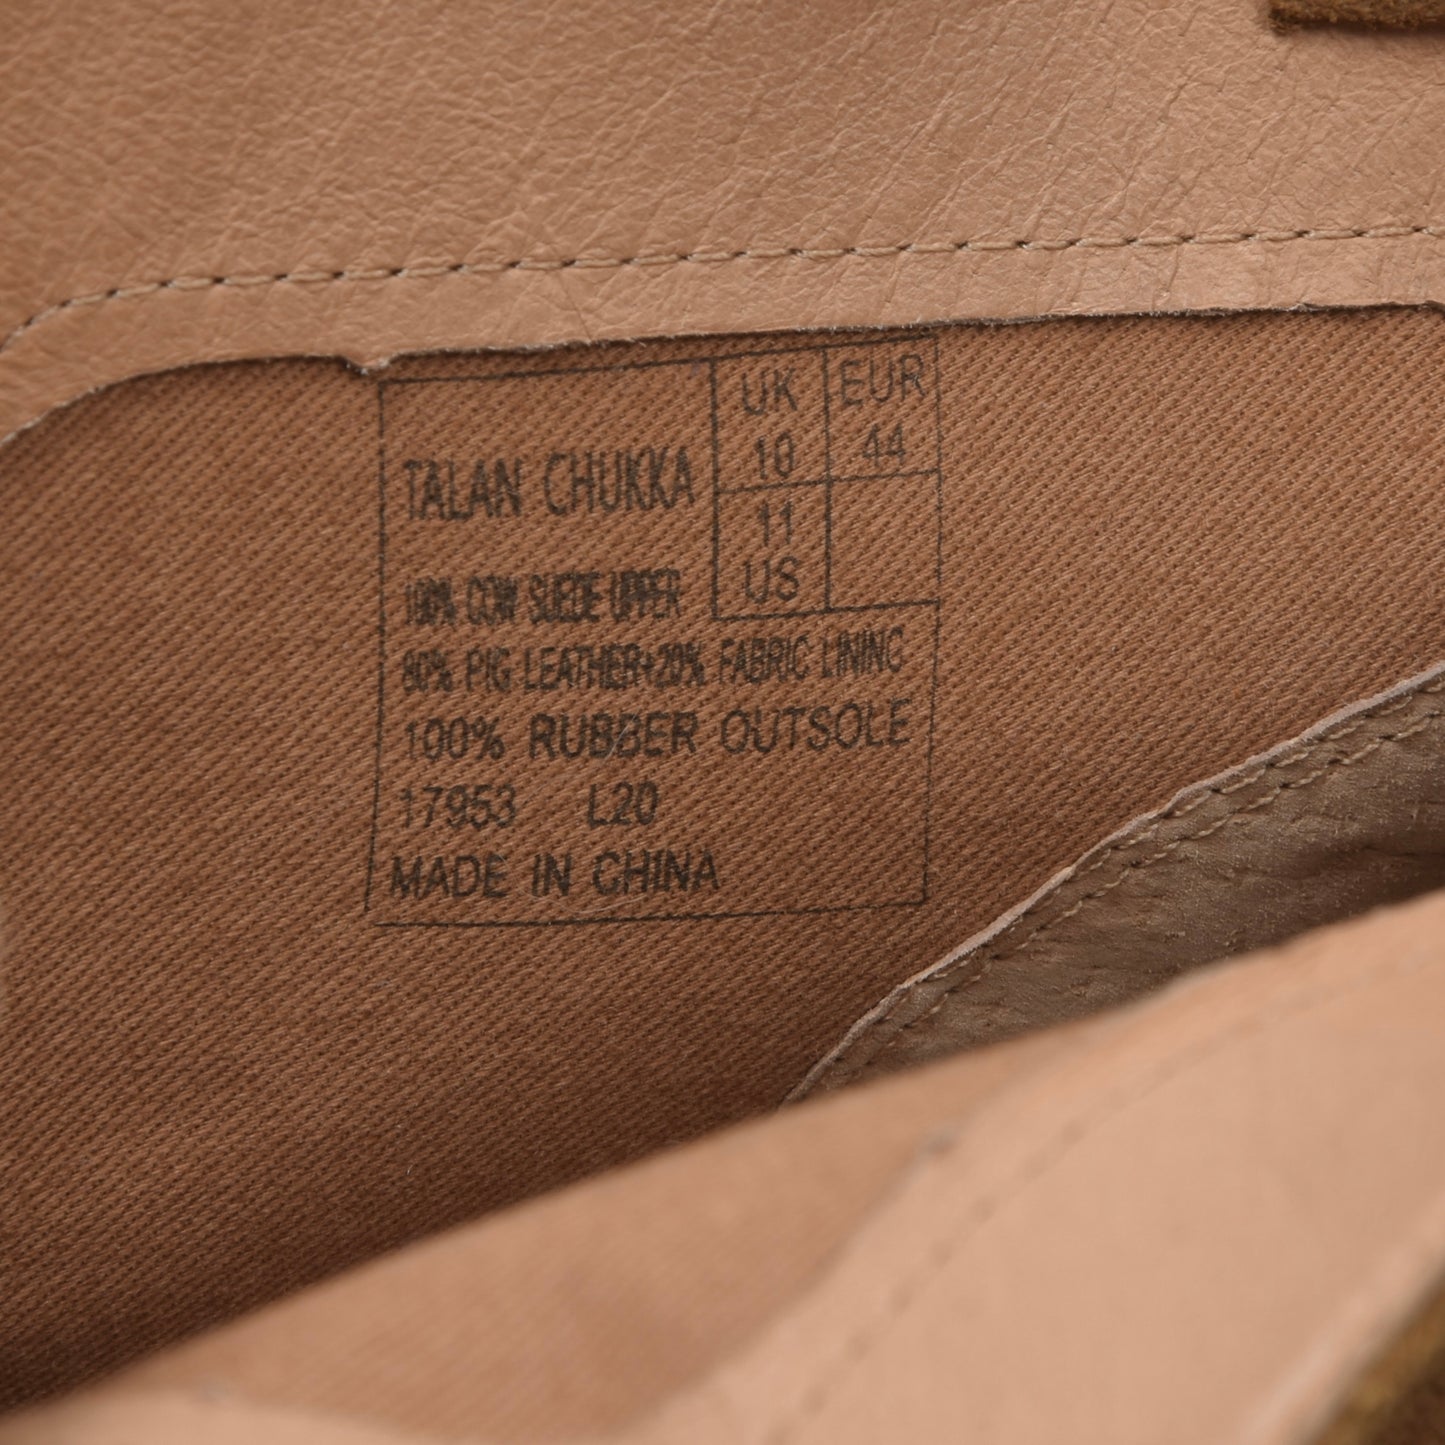 Polo Ralph Lauren Suede Talan Chukka Boots Size EUR 44/US11/UK 10 - Tan